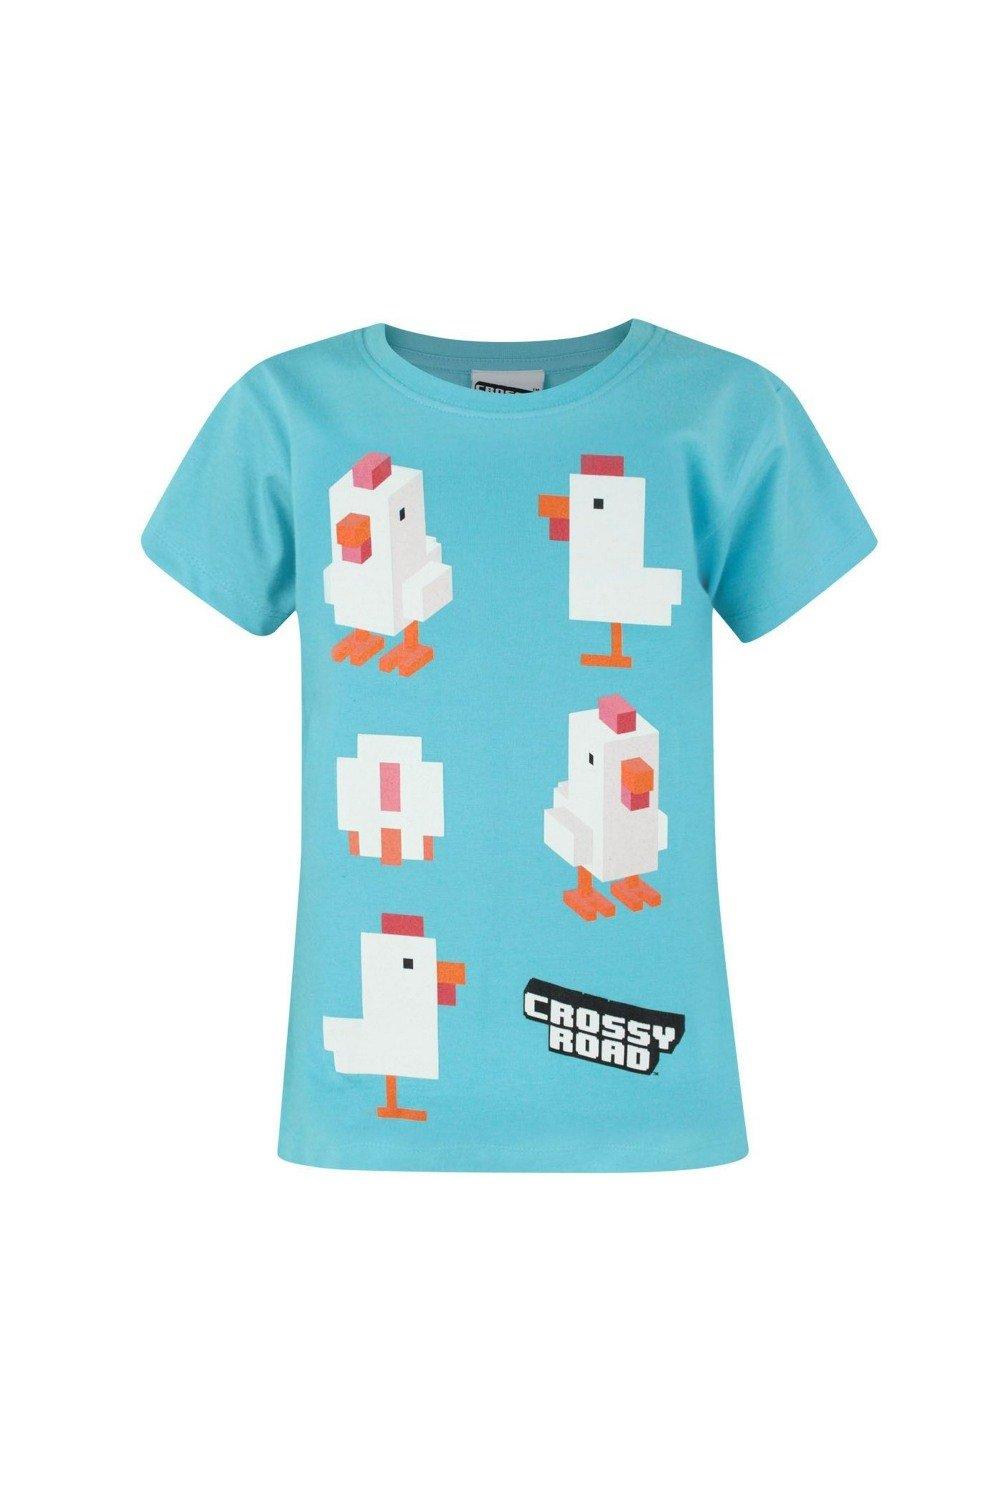 Crossy Road Official Chicken Design T-Shirt